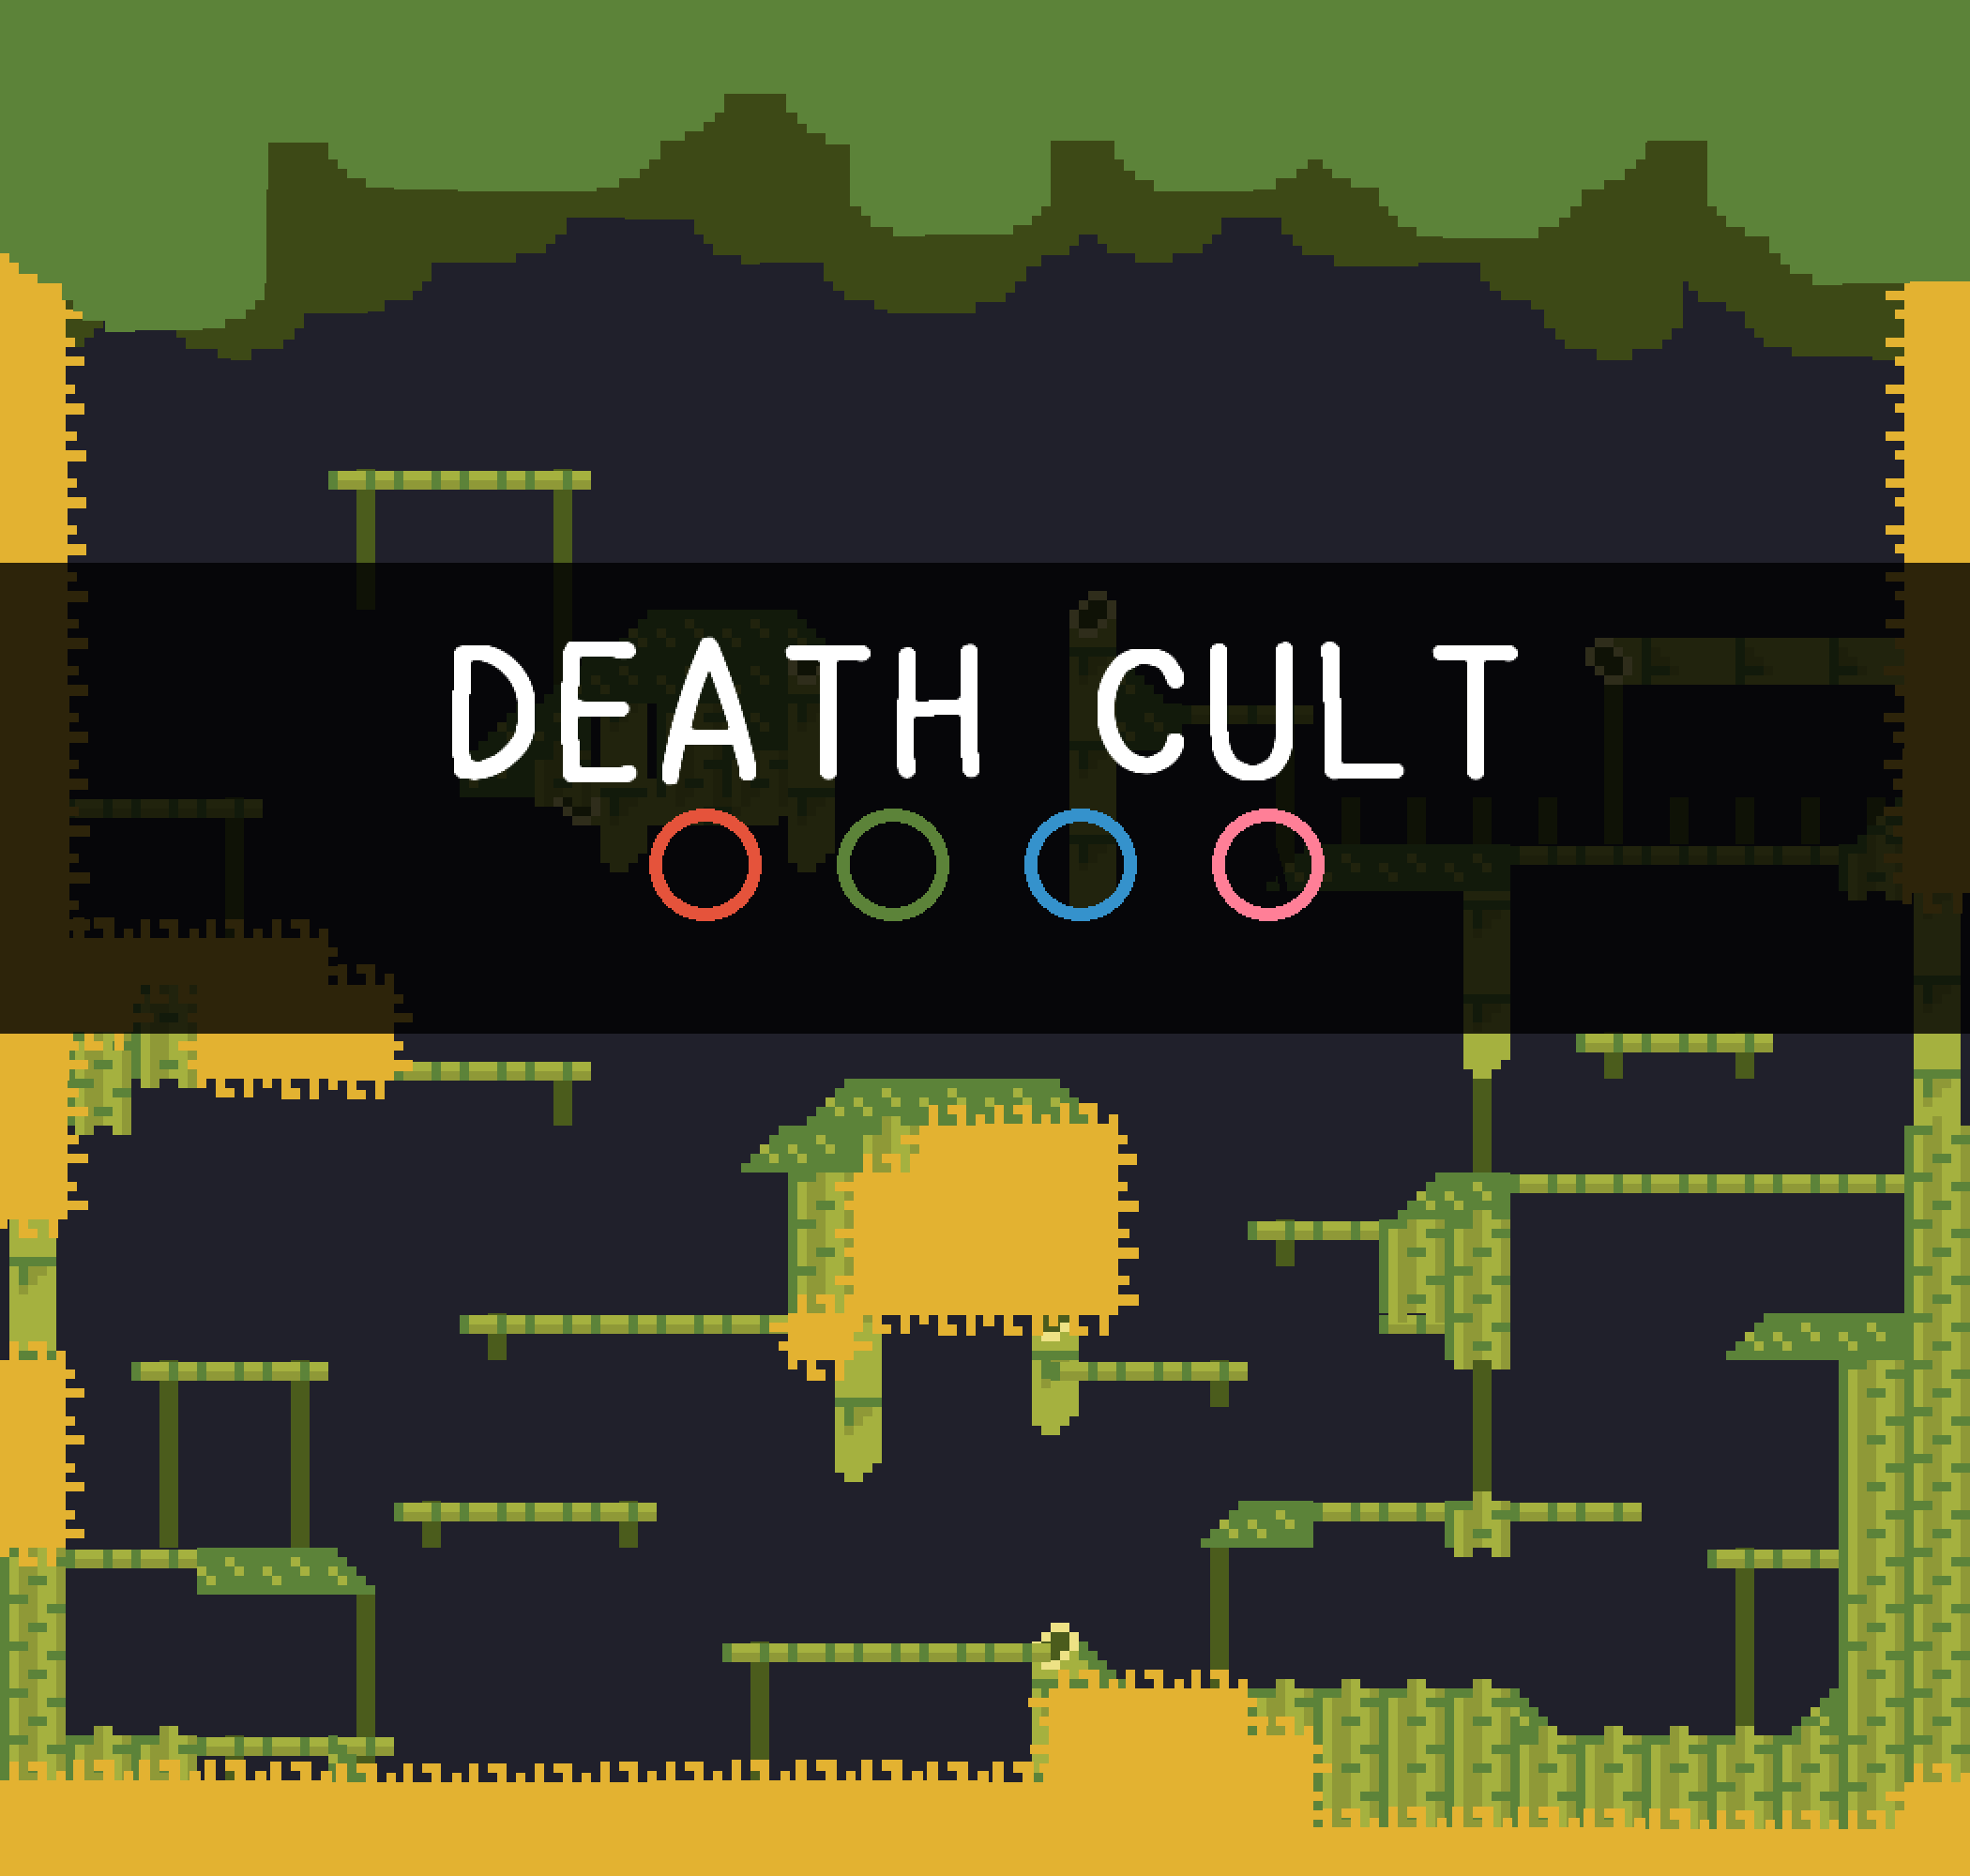 DEATH CULT